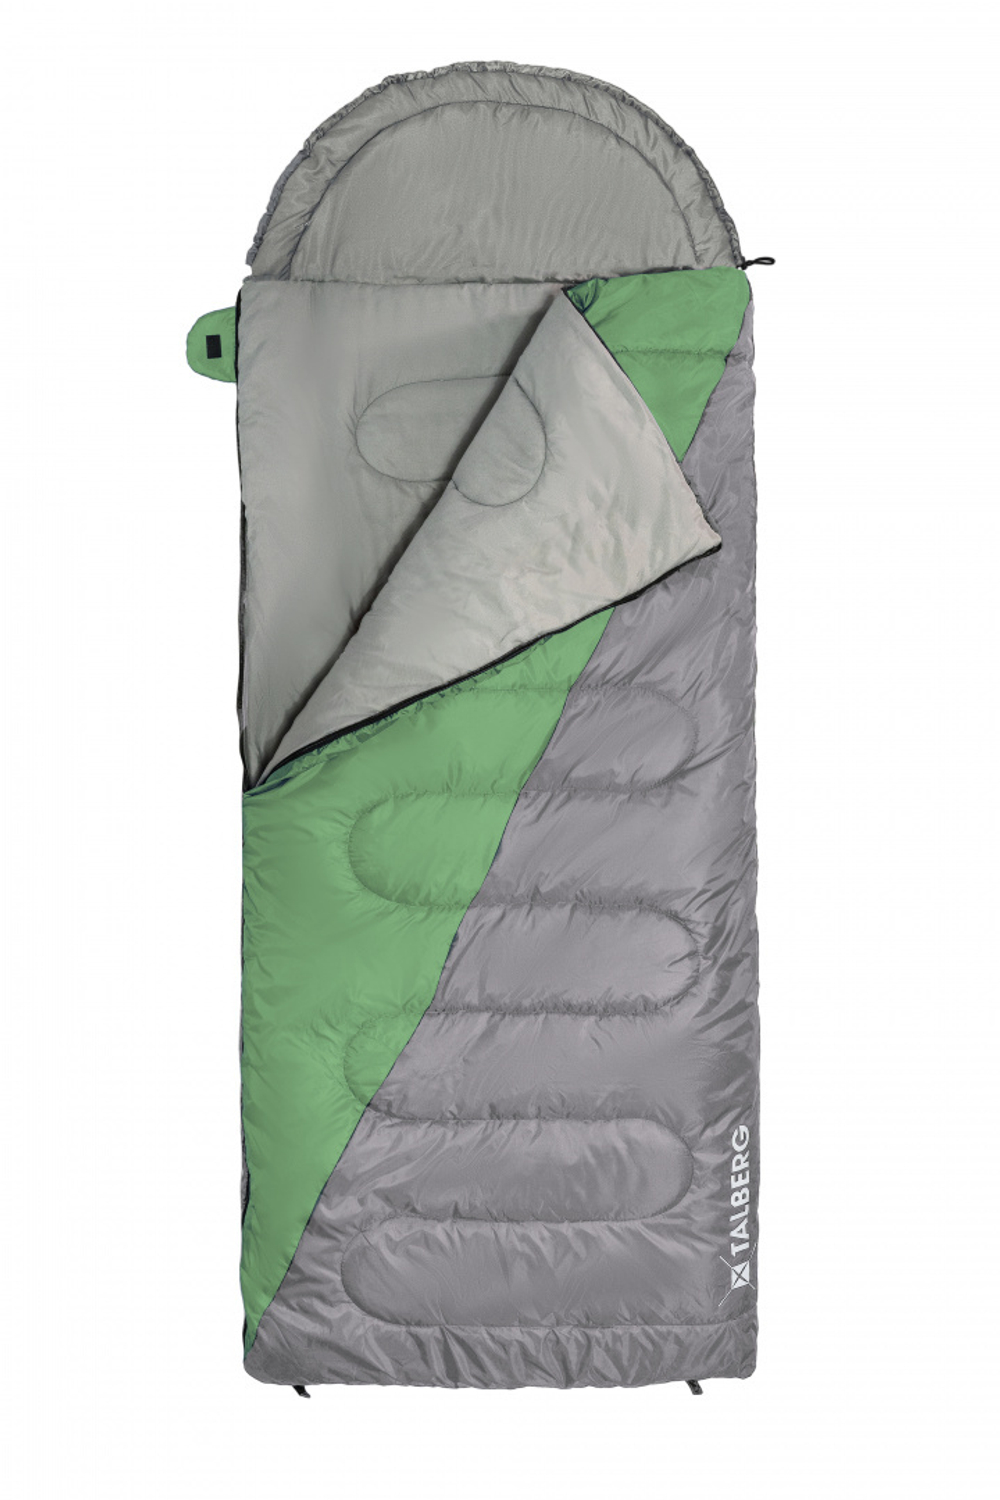 SUMMER 0°C спальный мешок (0С, зелёный левый)